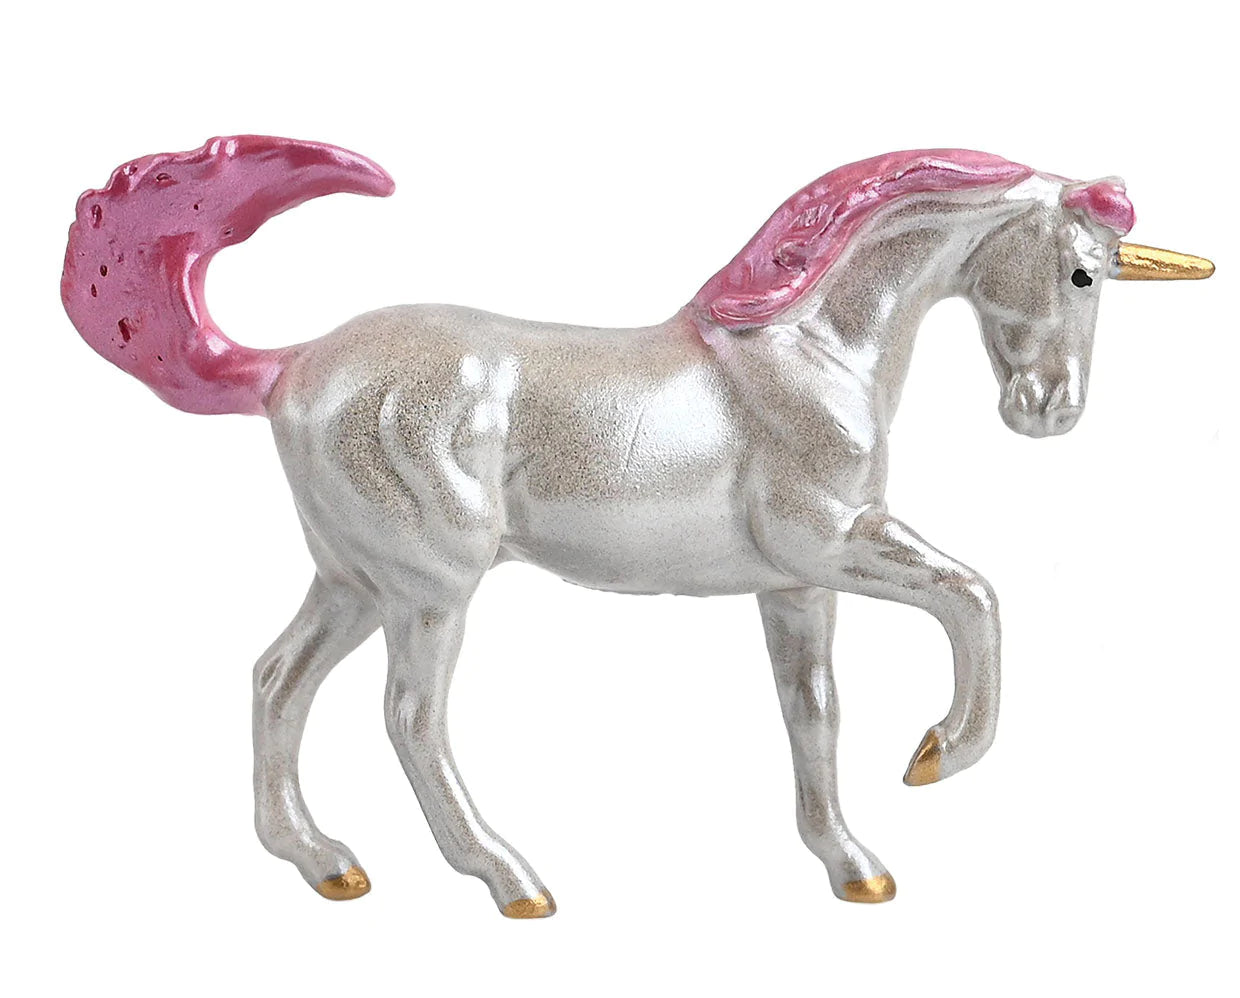 Breyer Mini Whinnies Unicorn Suprise Series 2